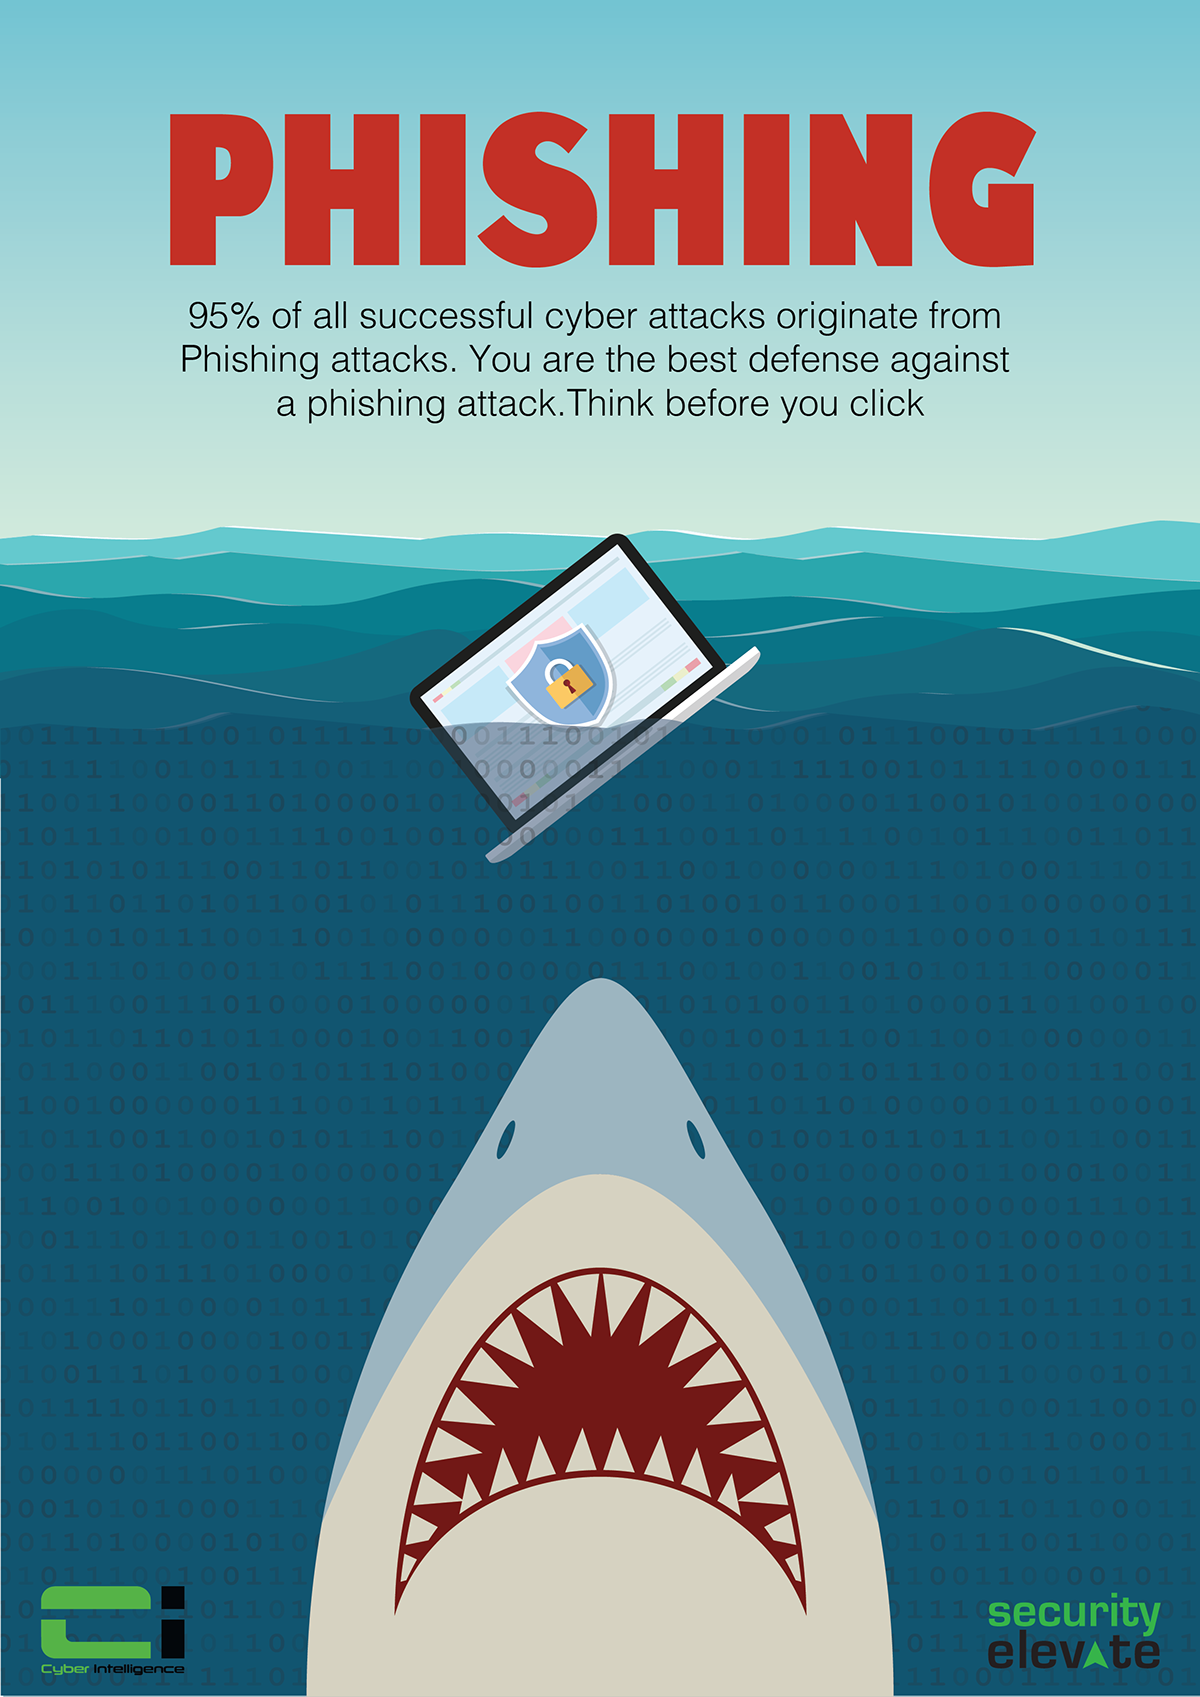 ransomware phishing poster billboard